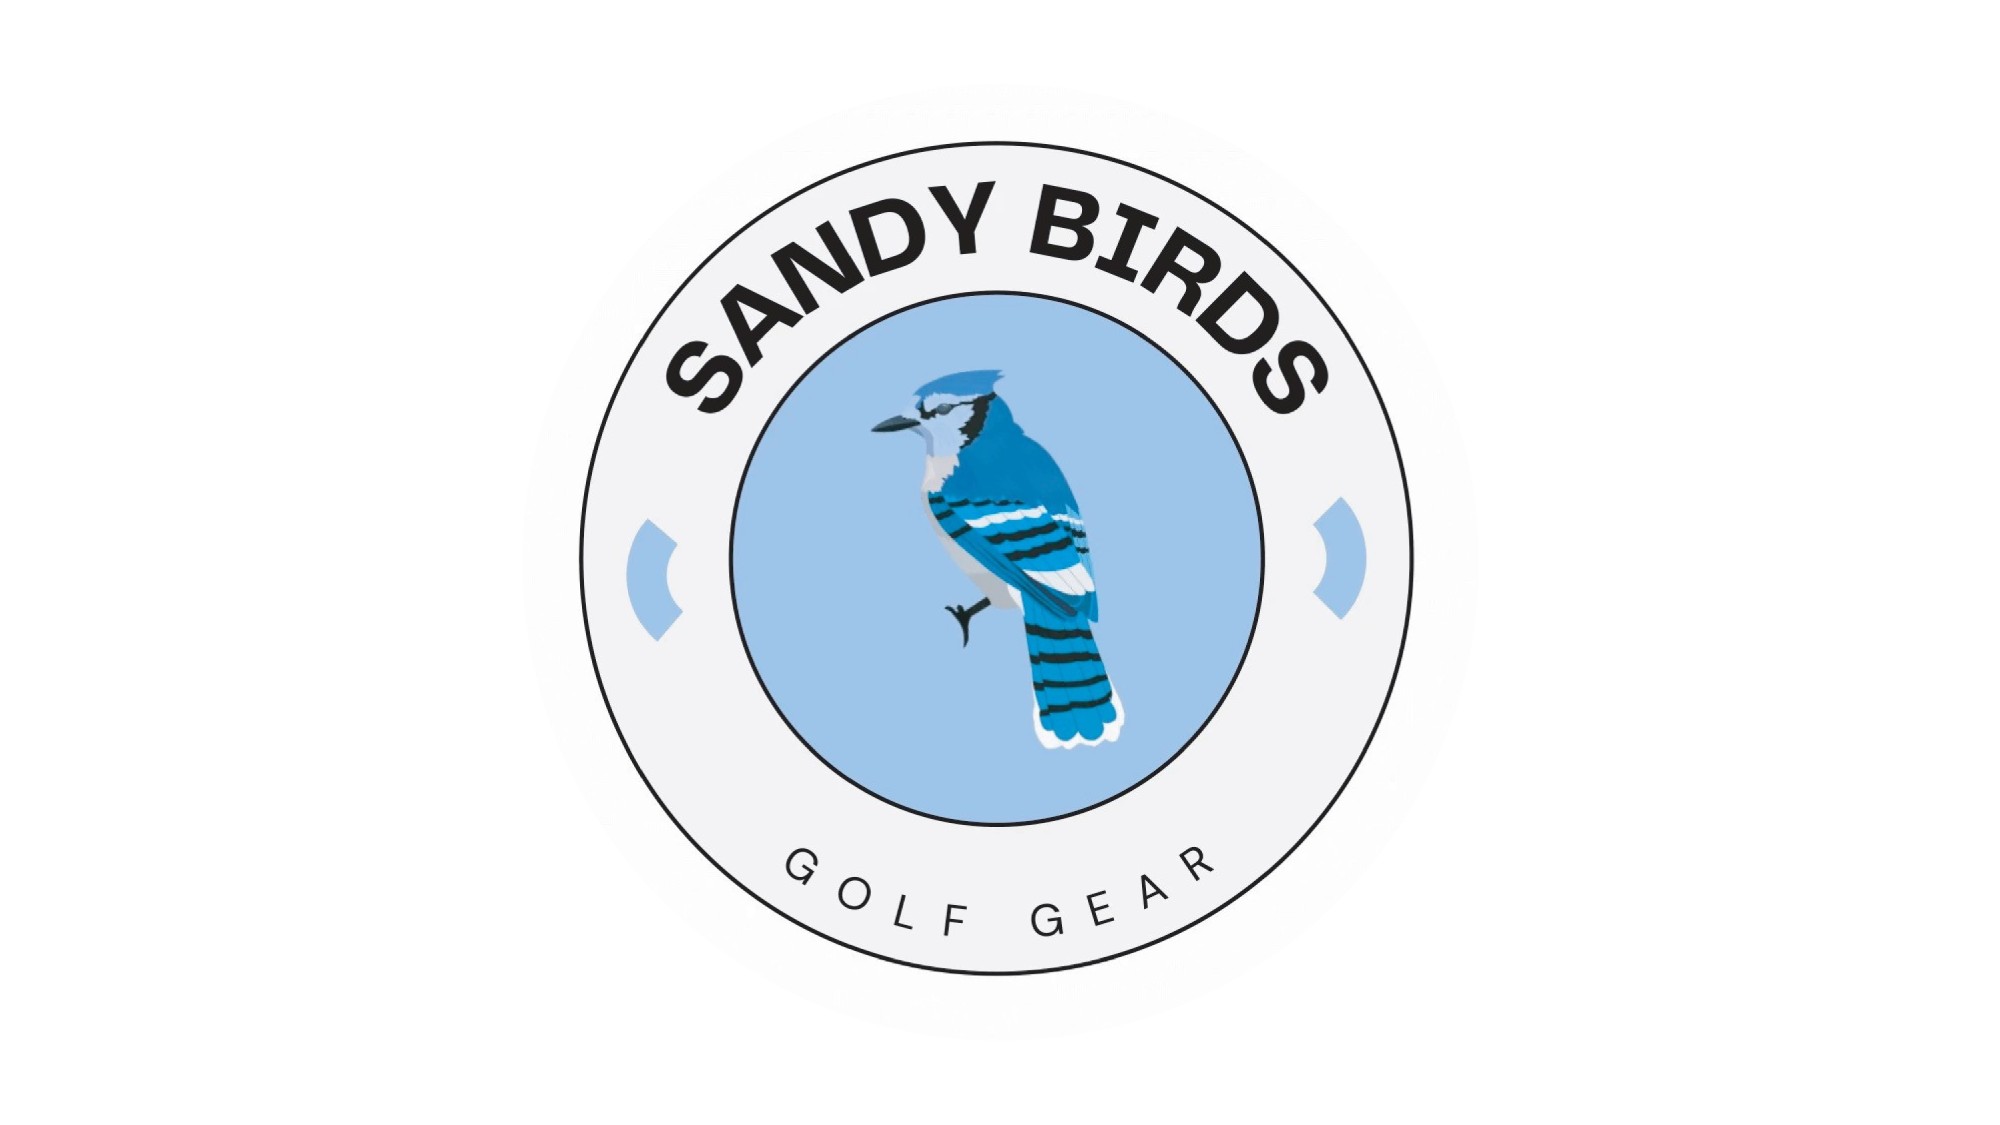 Sandy Birds Golf Gear - Coast Capital Venture Connection at SFU - Simon  Fraser University